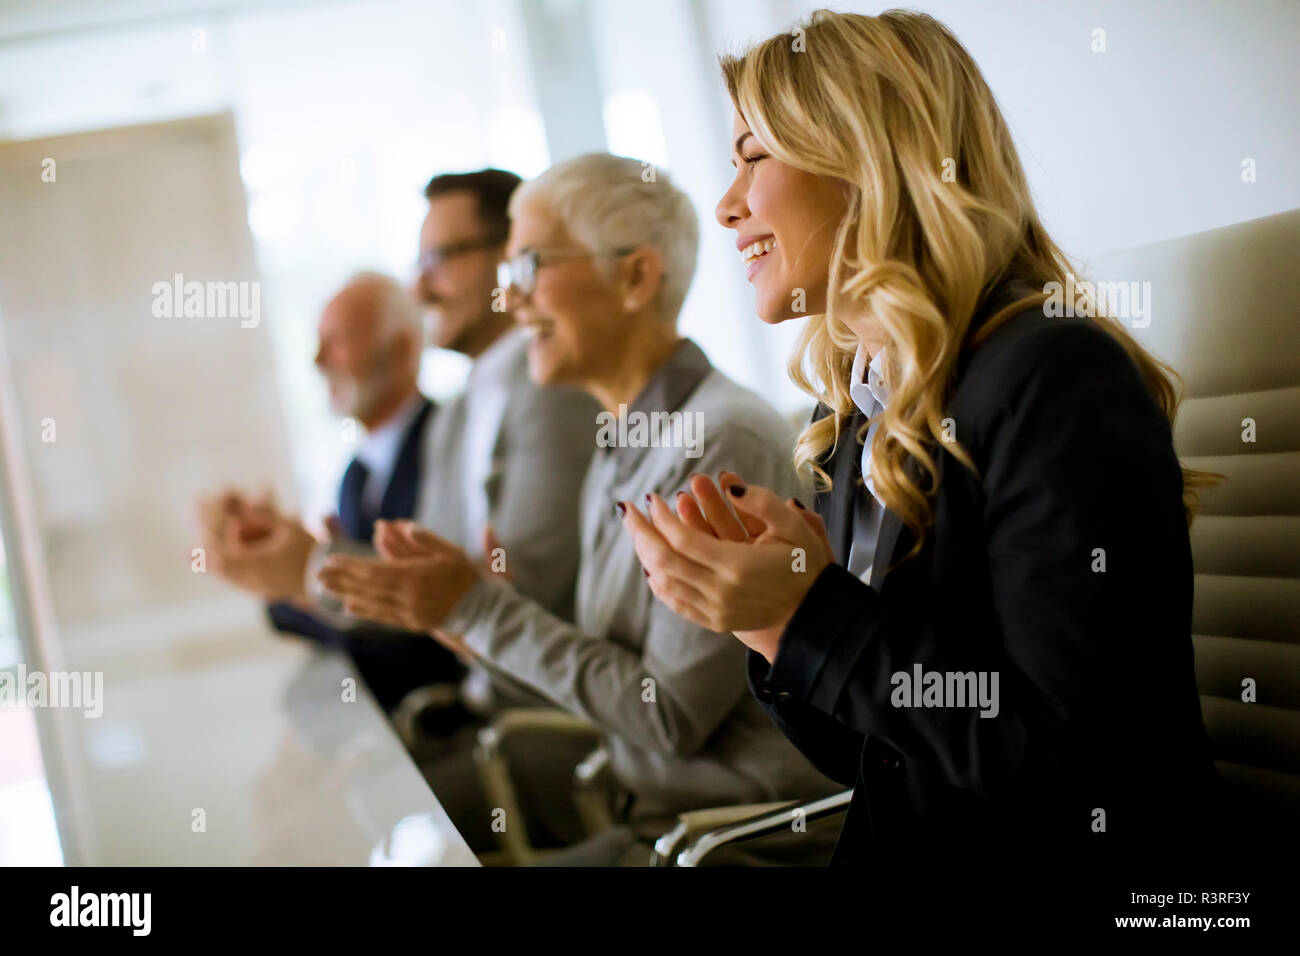 Satisfait de l'équipe entreprises fier clapping hands while sitting in row at office Banque D'Images